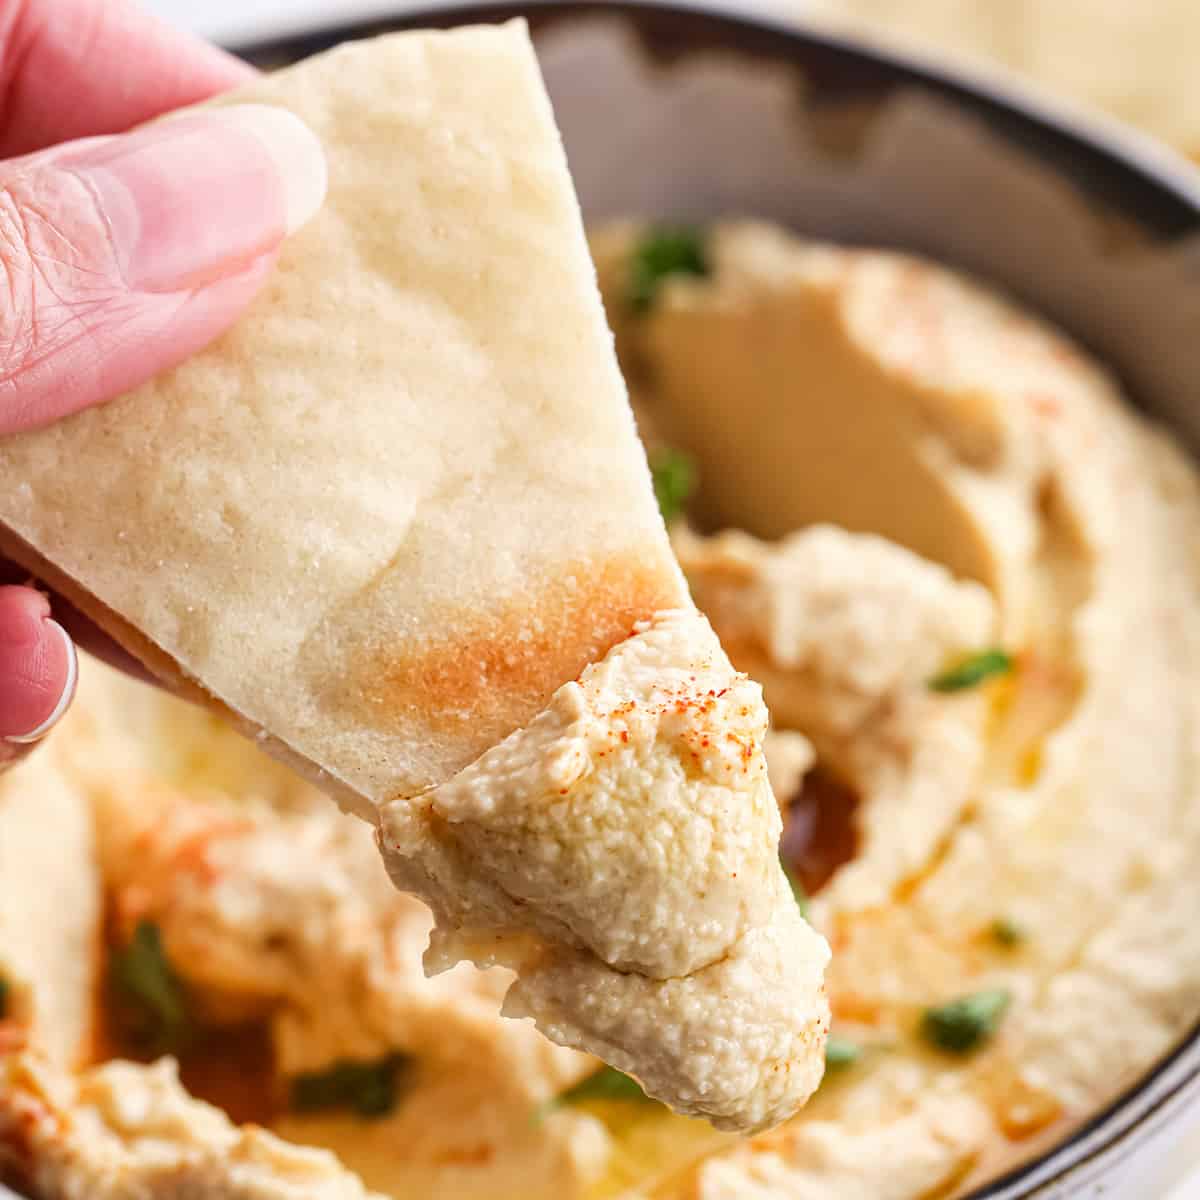 Homemade Hummus on a triangle of pita bread